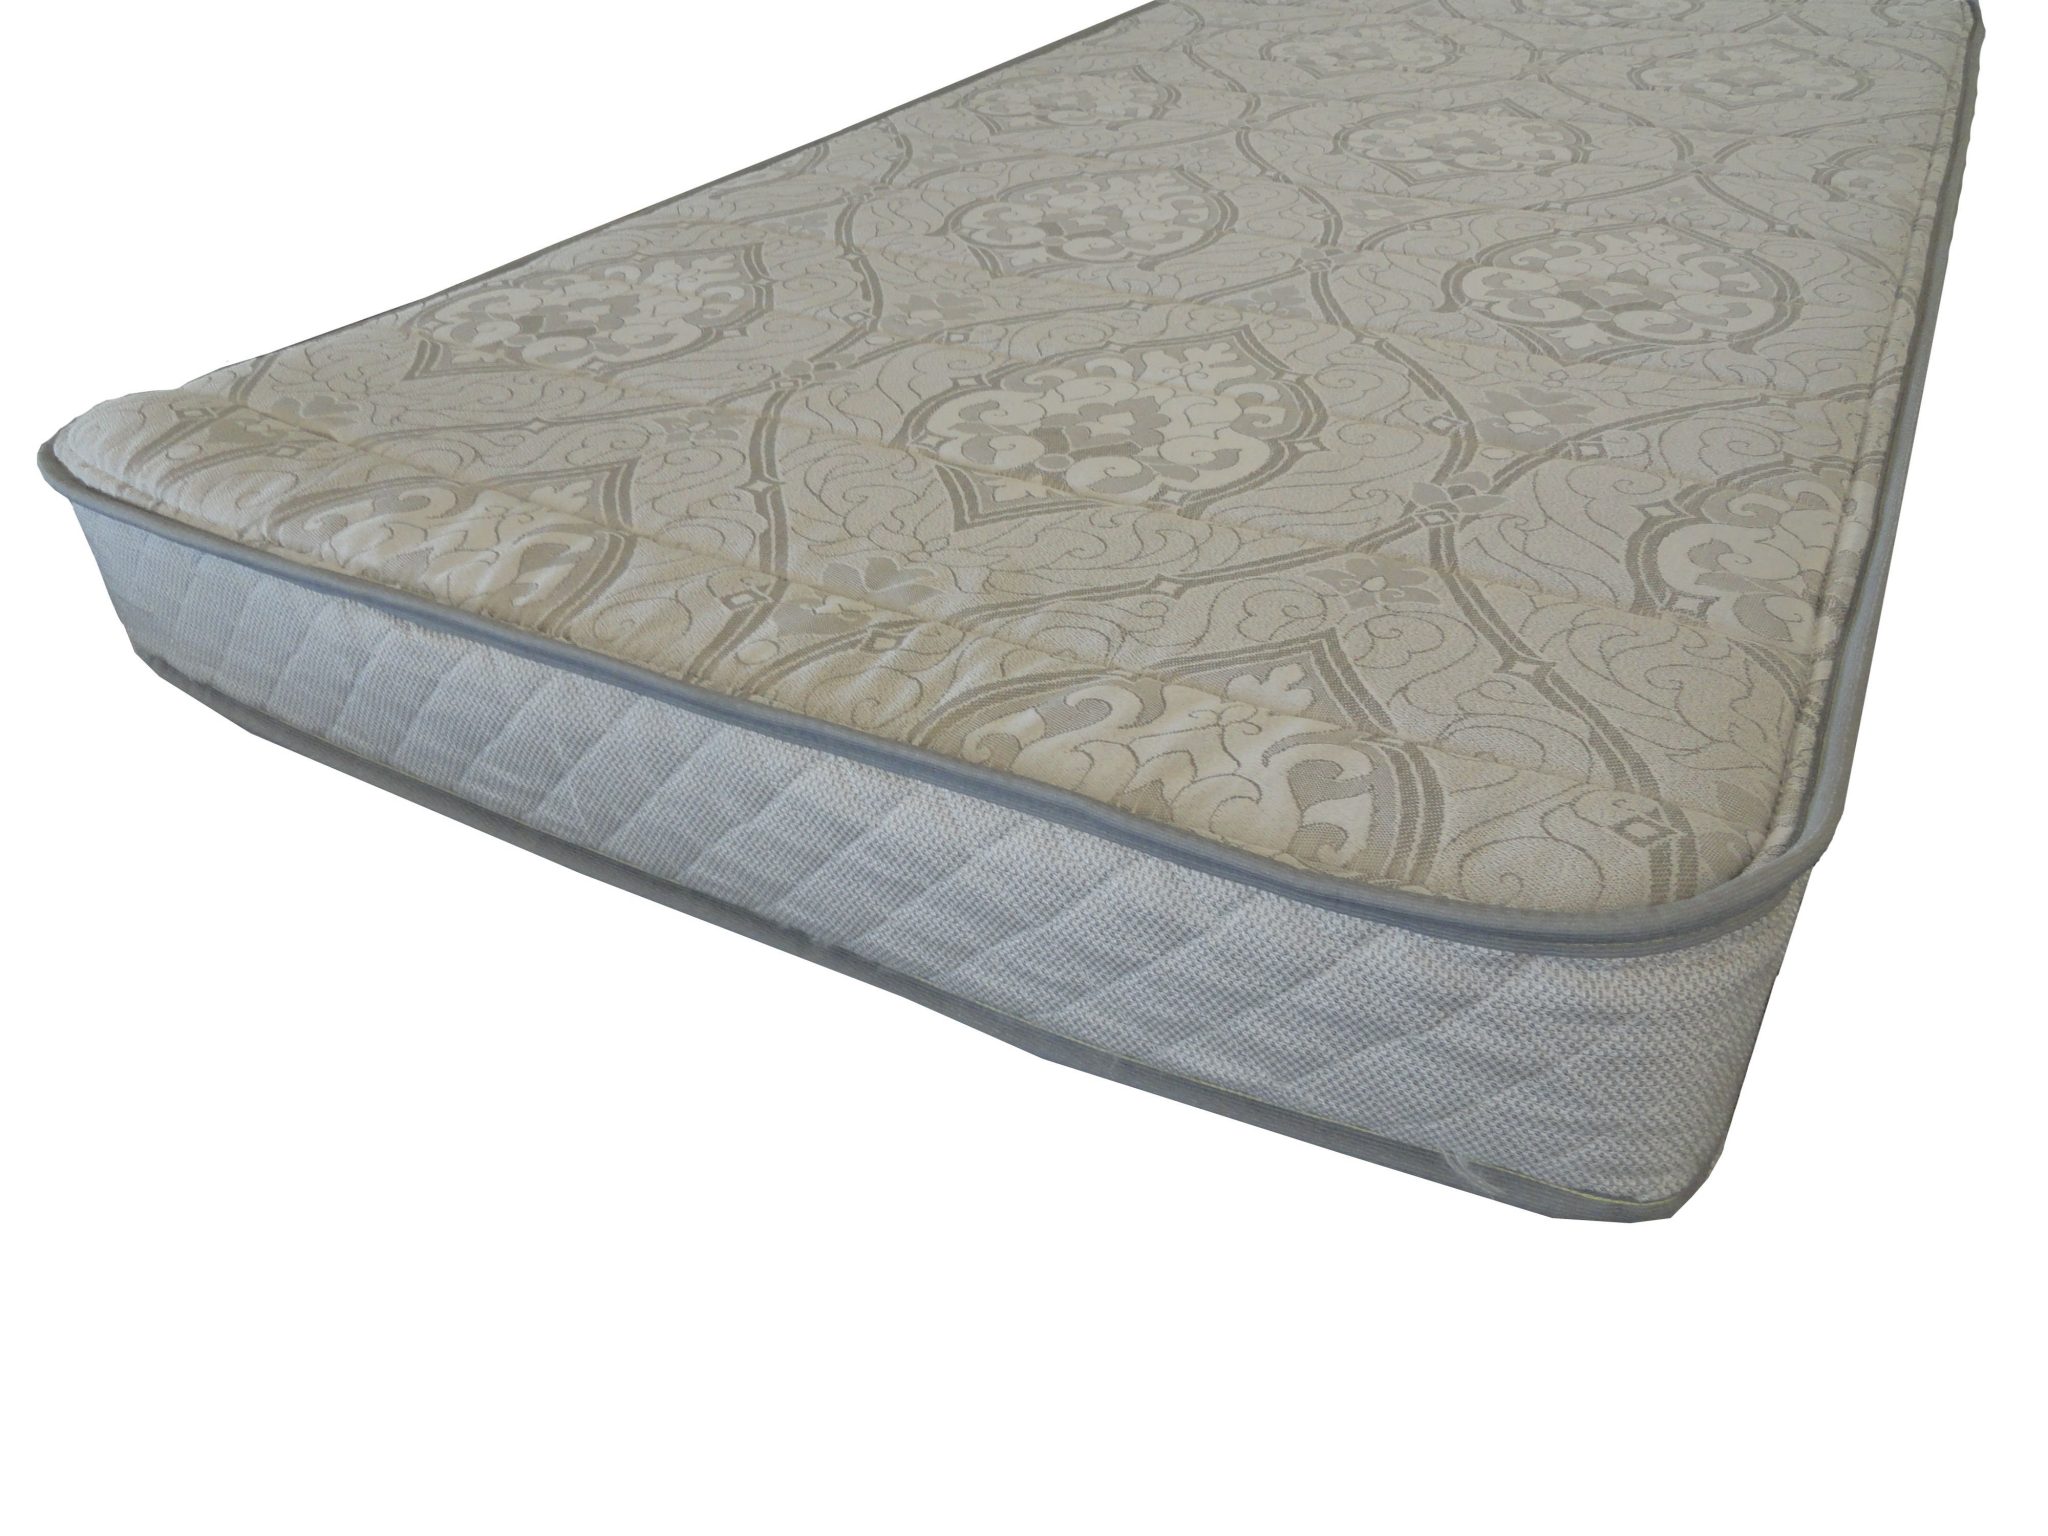 quilt for 14 inch mattress